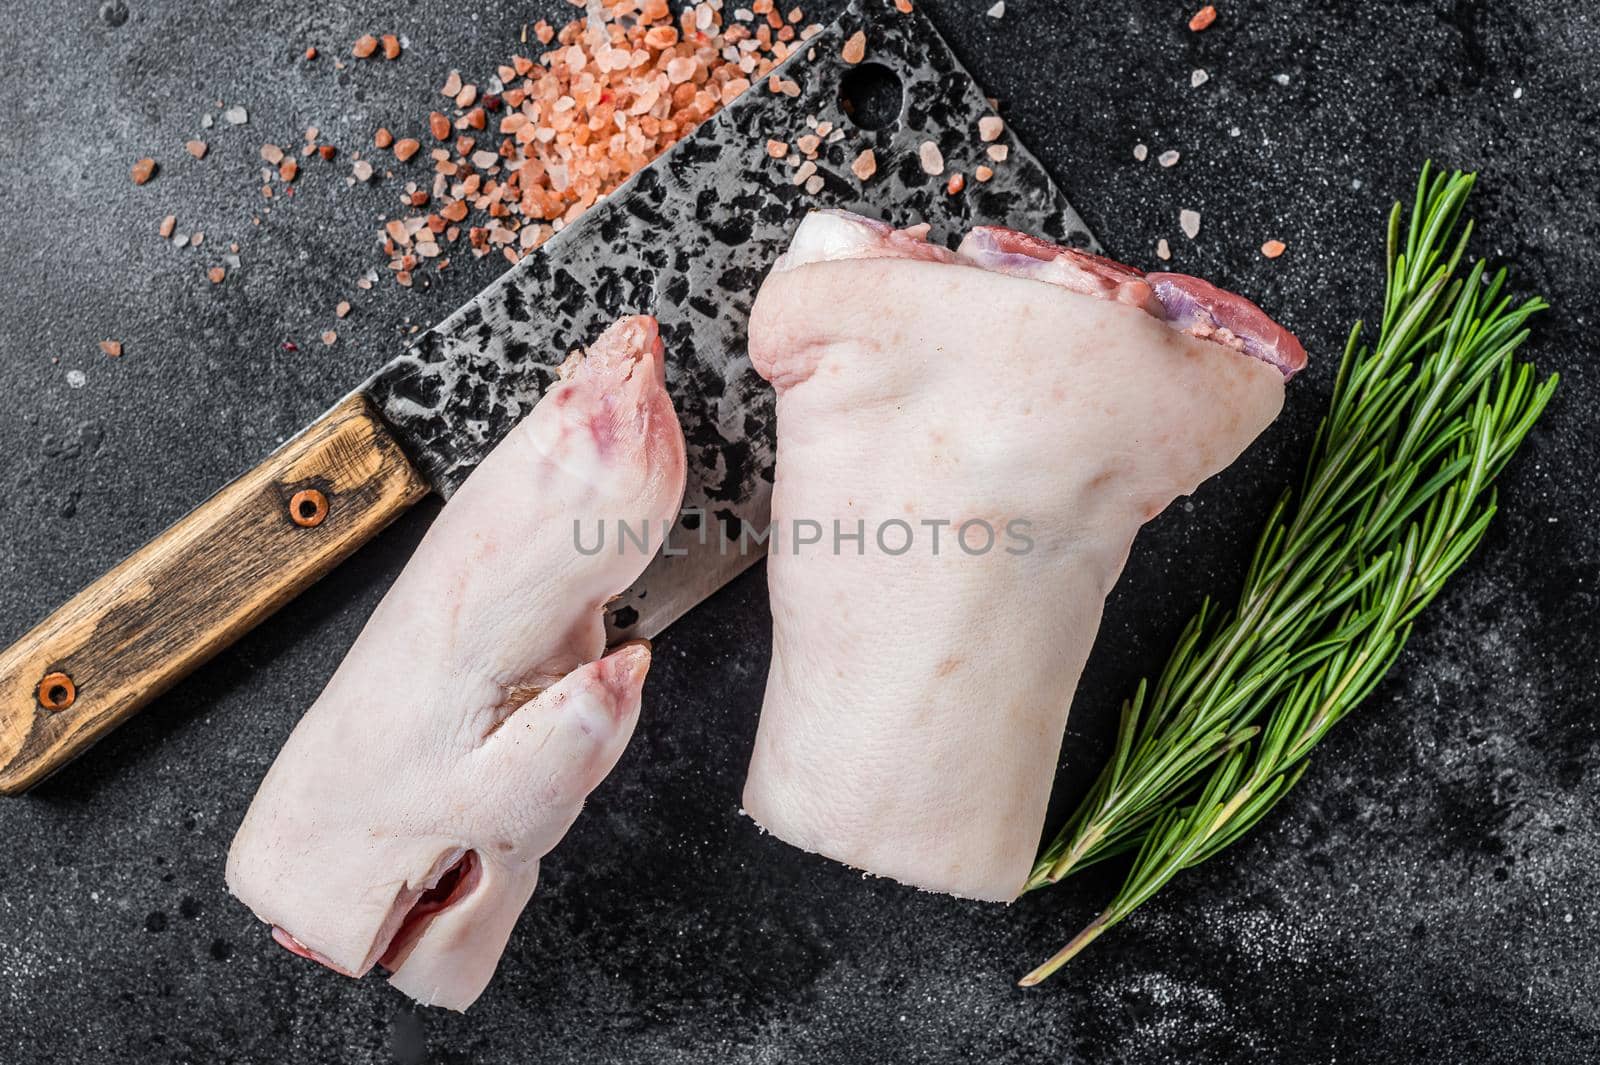 Butcher shop - Raw pork hoof, knuckle, feet on a cutting board. Black background. Top view.